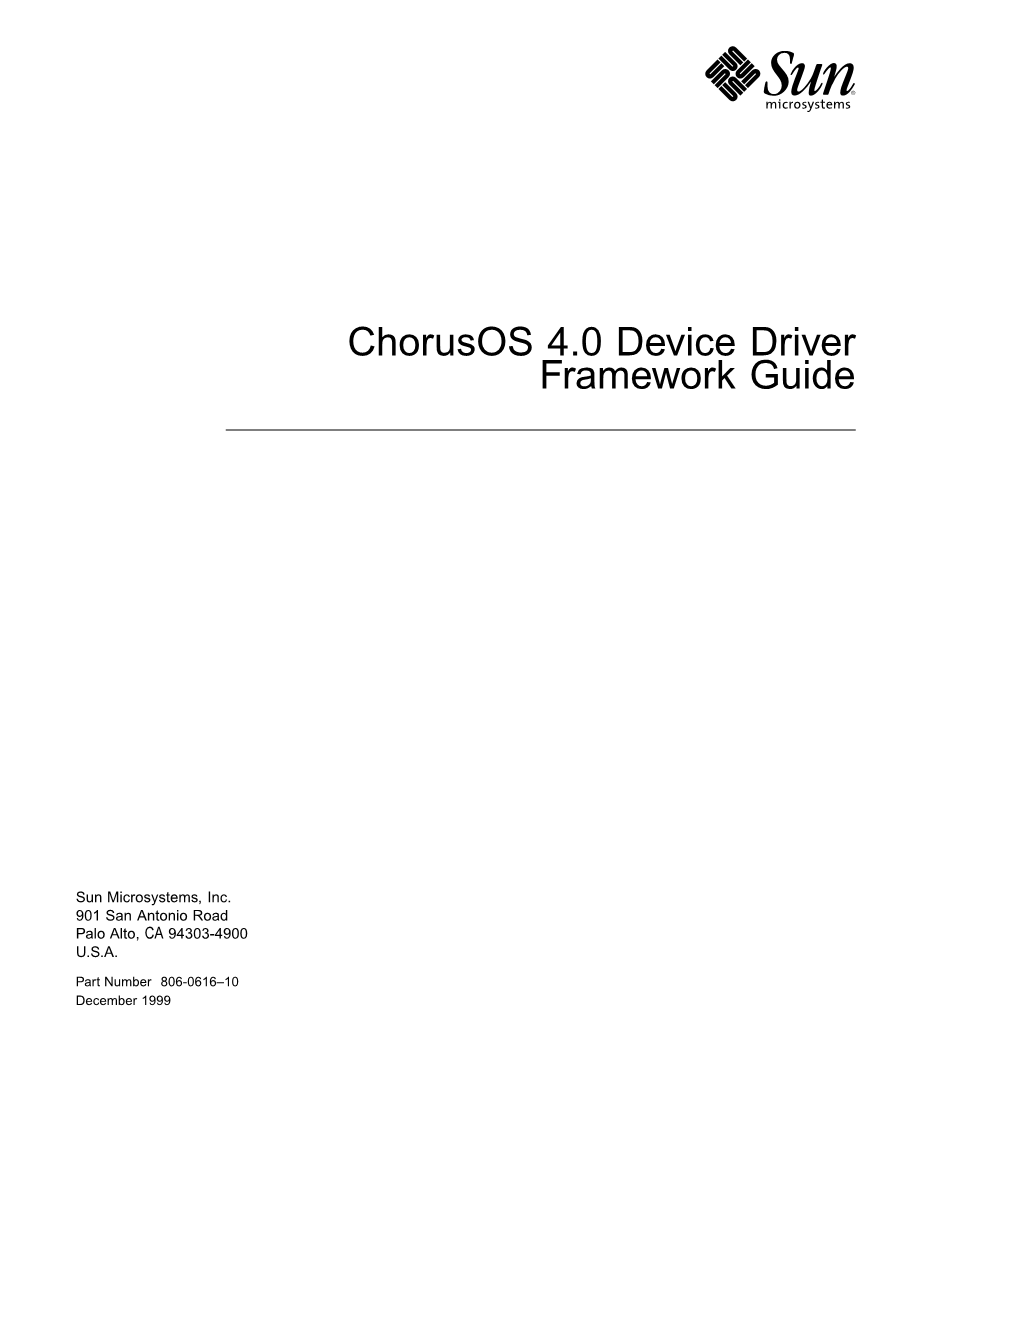 Chorusos 4.0 Device Driver Framework Guide